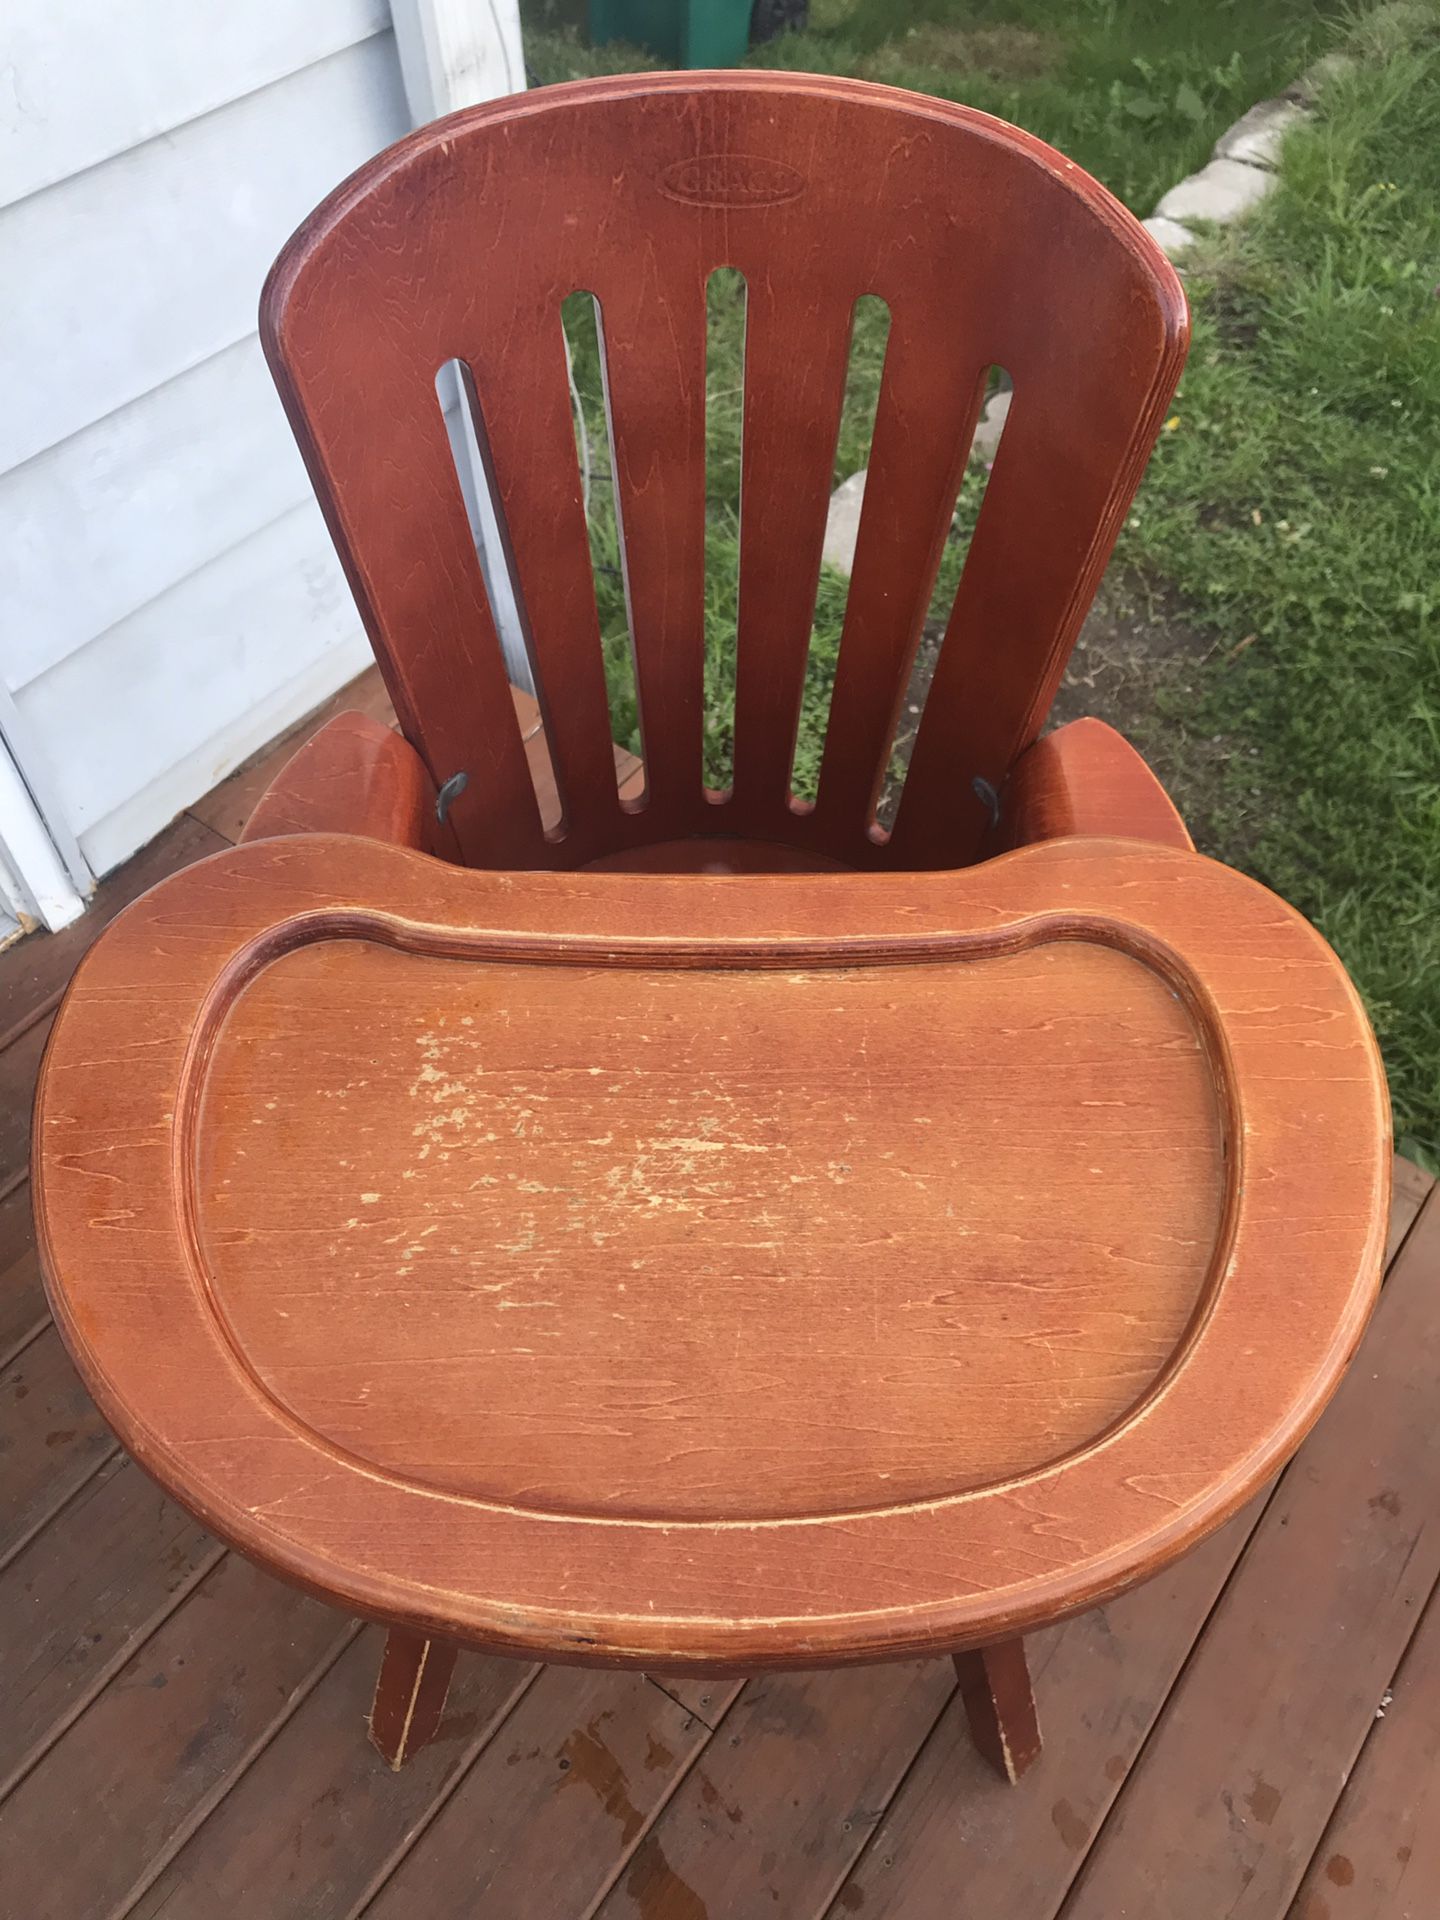 Graco Wooden High Chair